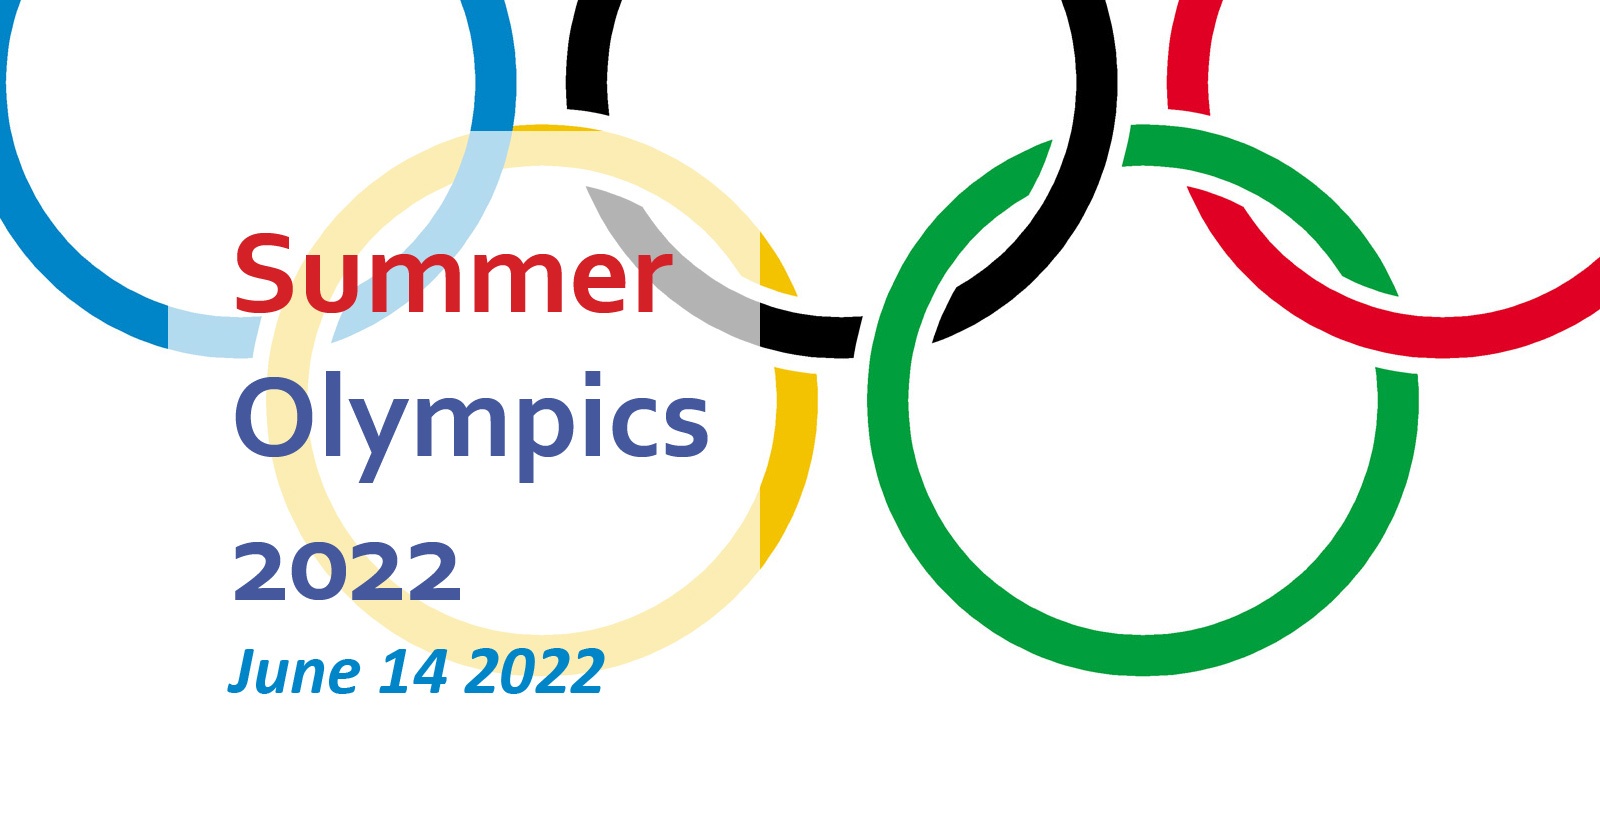 Register for Summer Olympics 2022